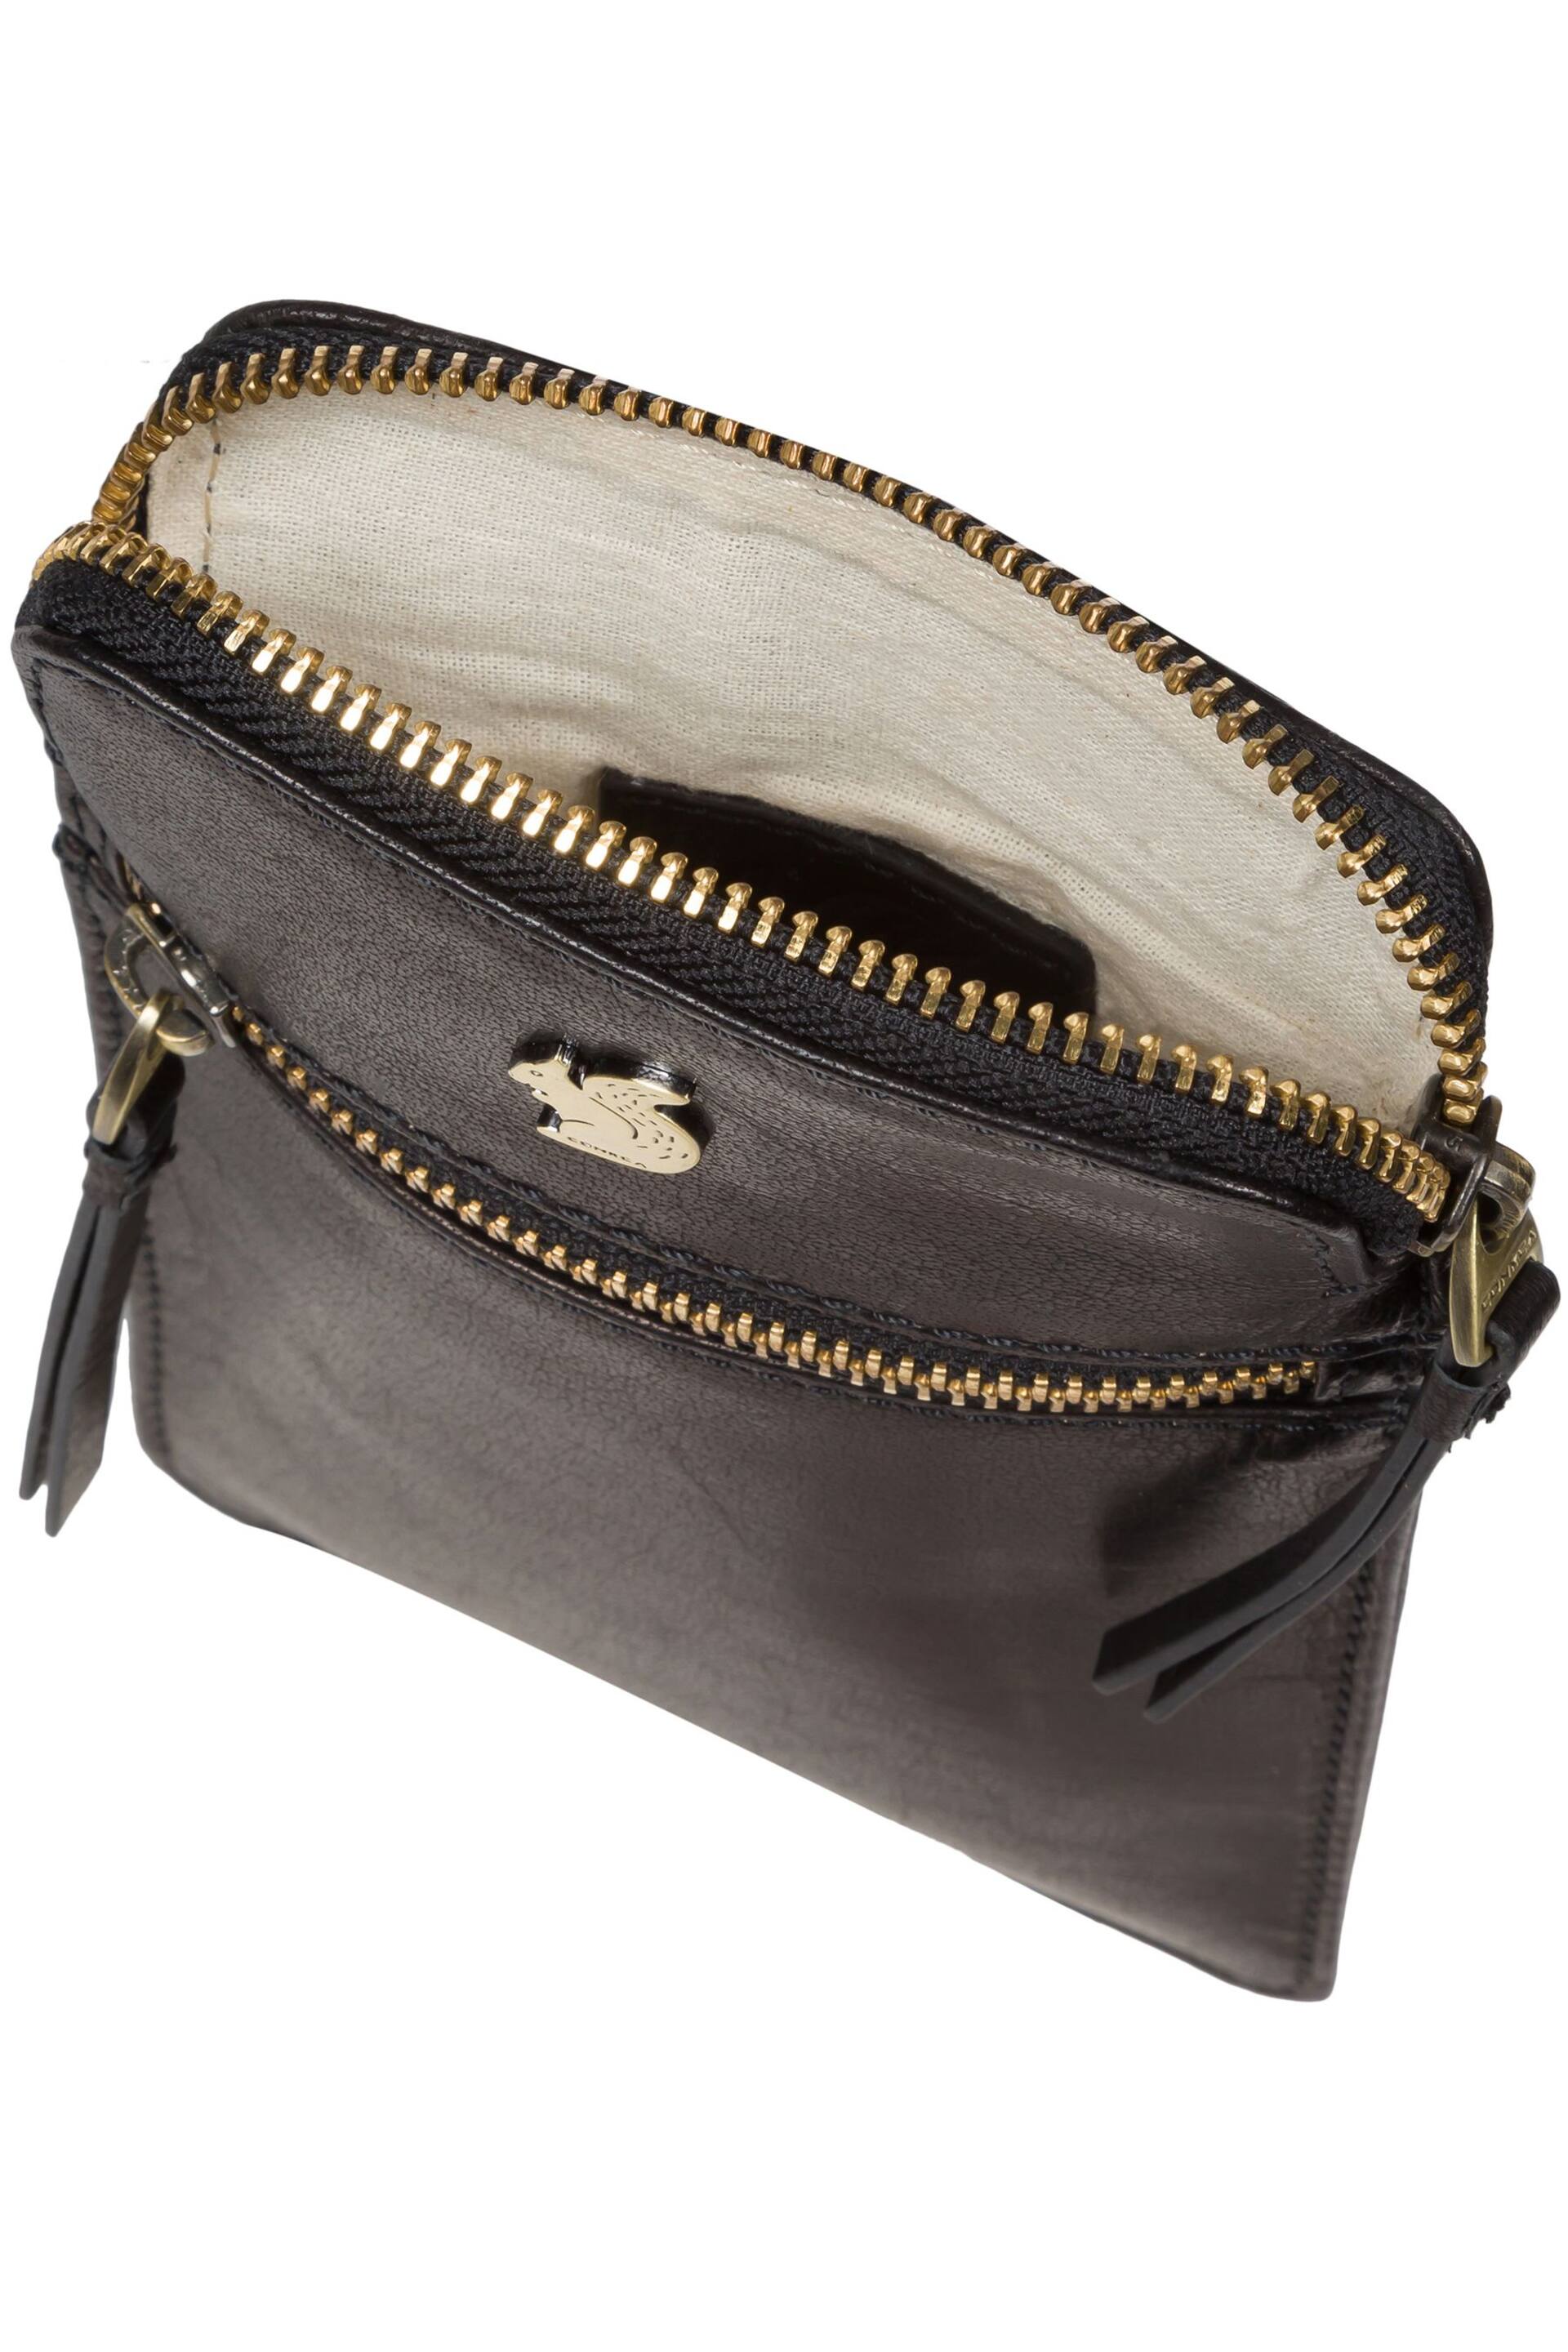 Conkca Bambino Leather Cross-Body Phone Bag - Image 4 of 5